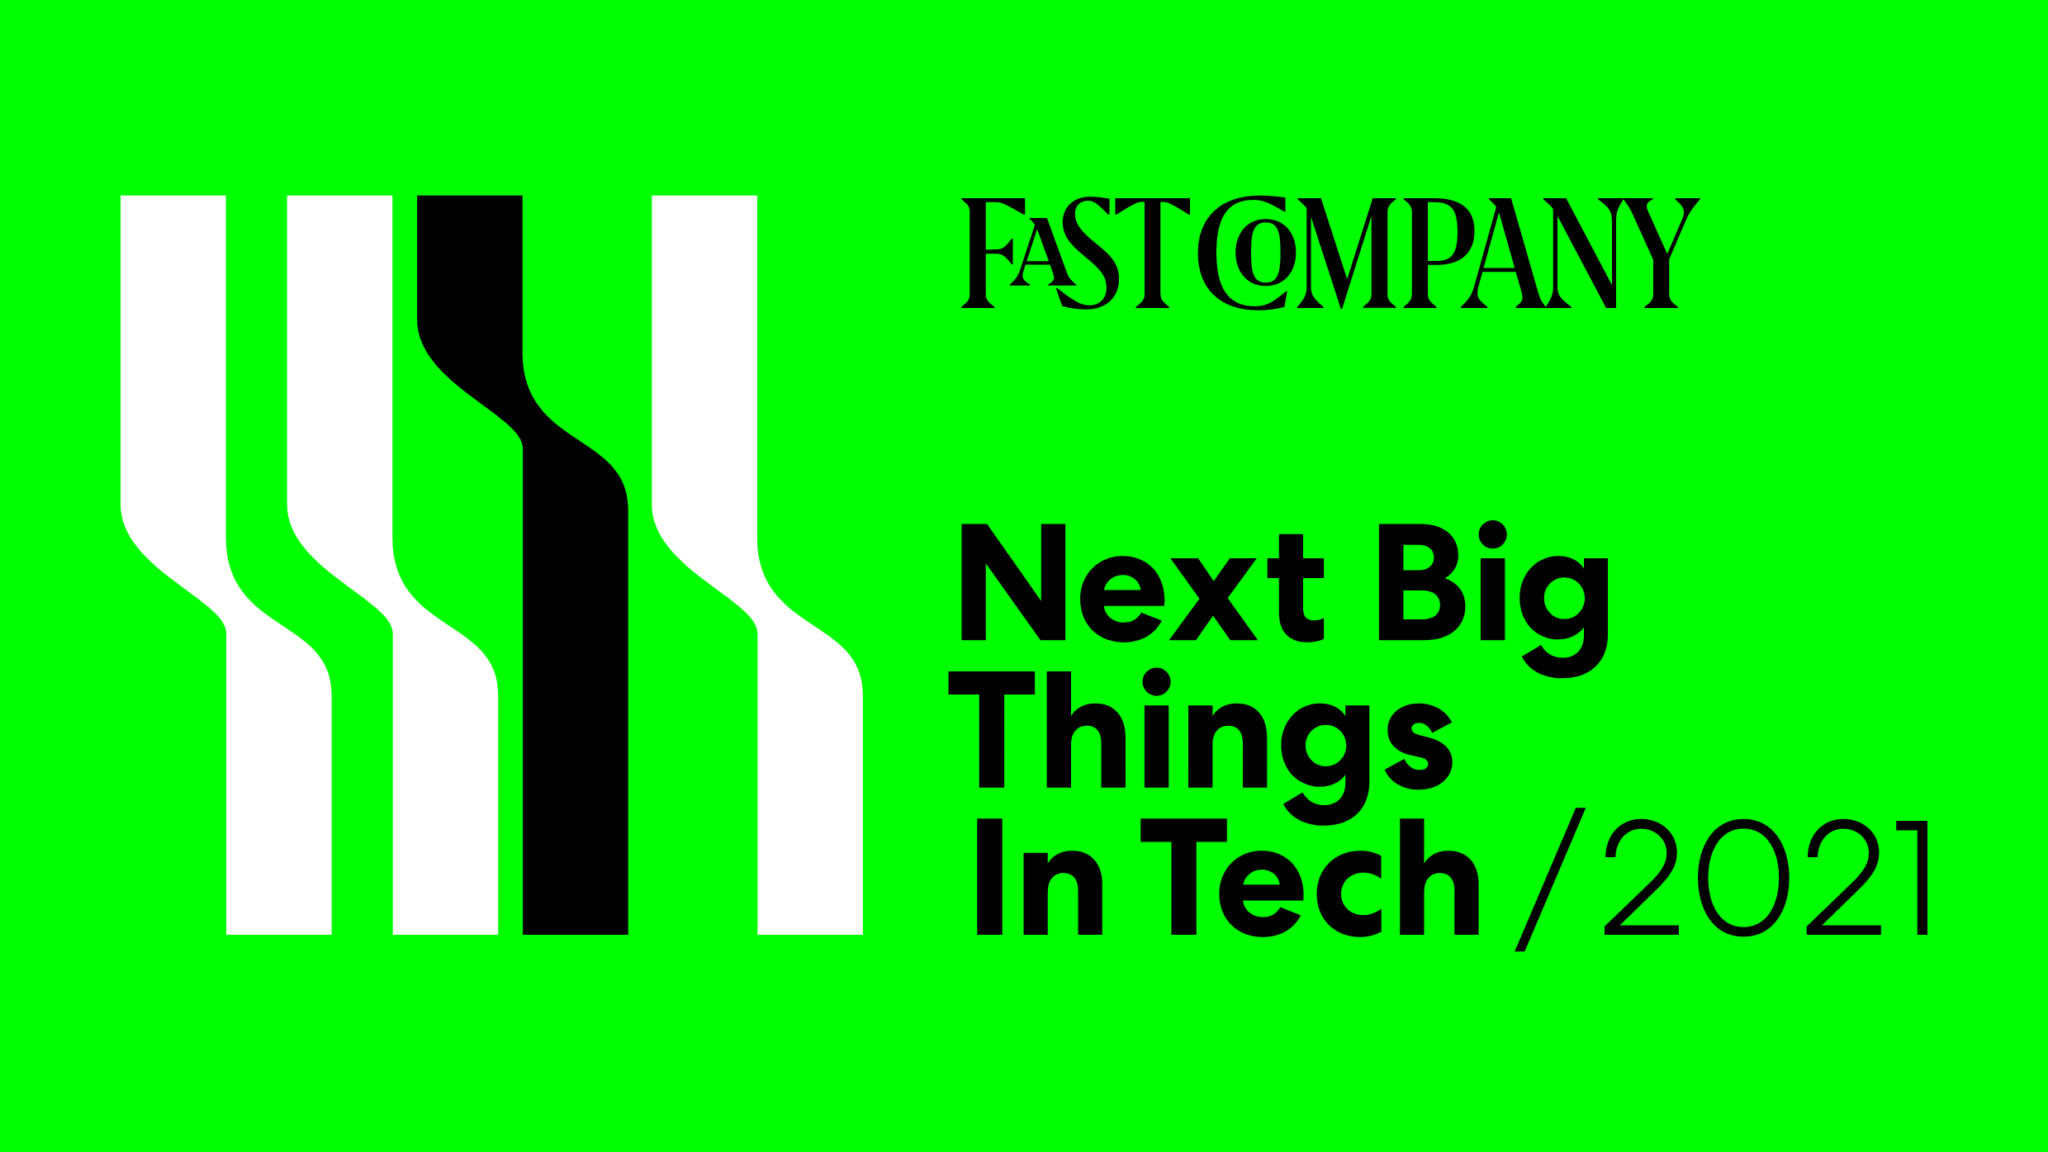 Keyavi Data Wins Fast Company’s First-Ever Next Big Things in Tech Award